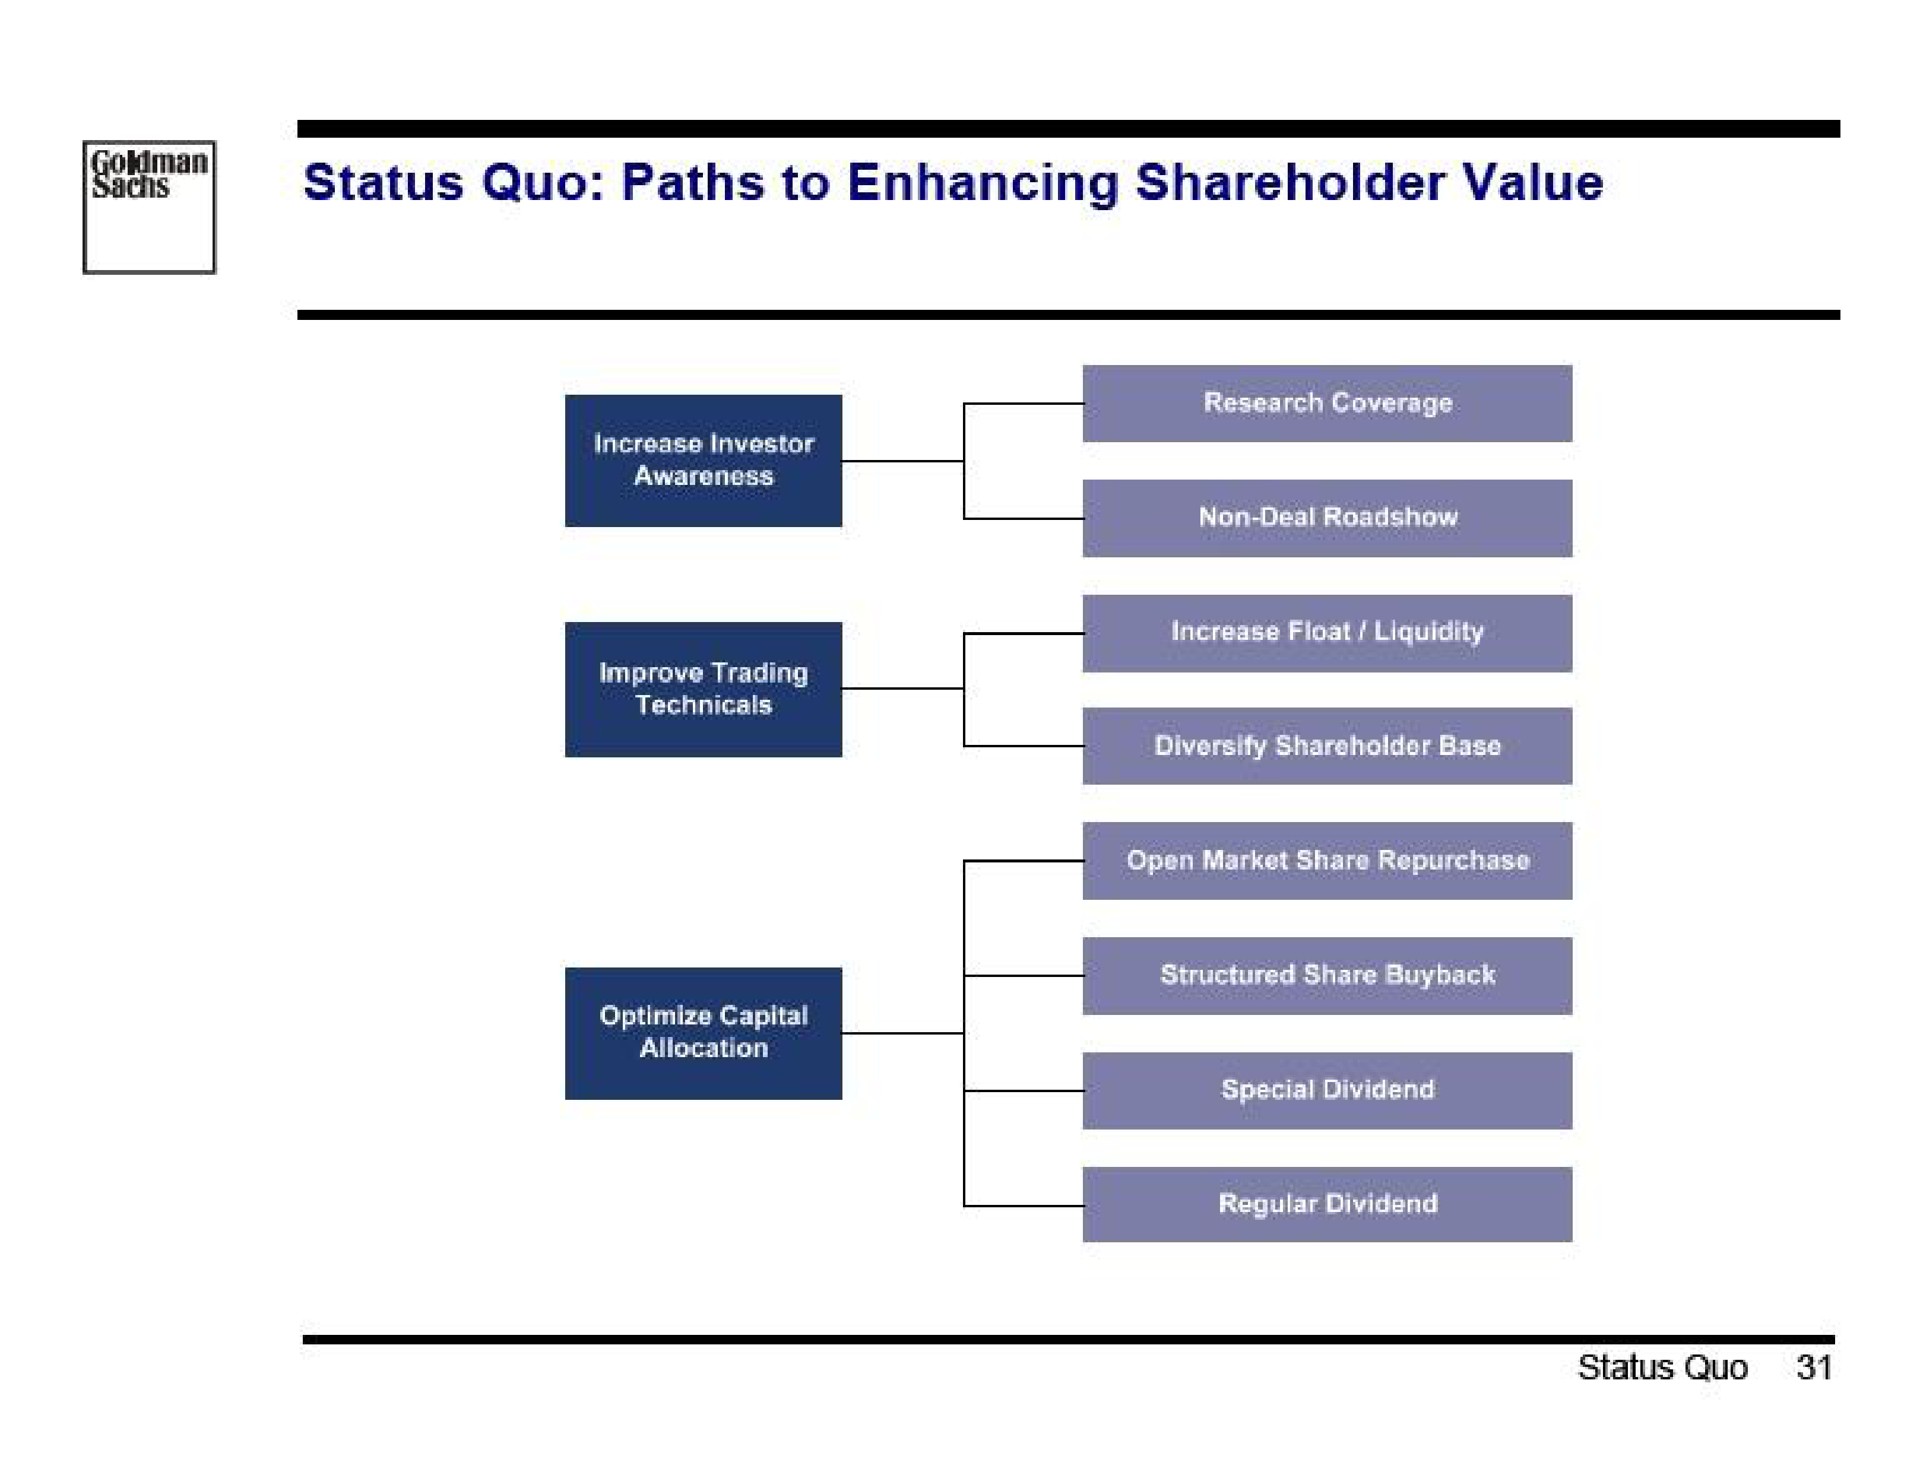 gas status quo paths to enhancing shareholder value | Goldman Sachs